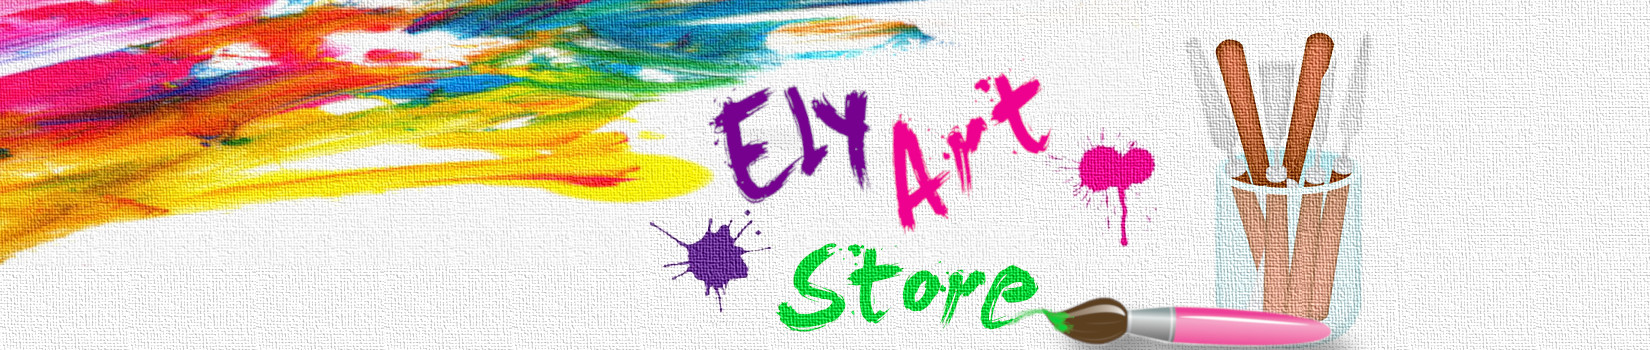 Ely Art Store